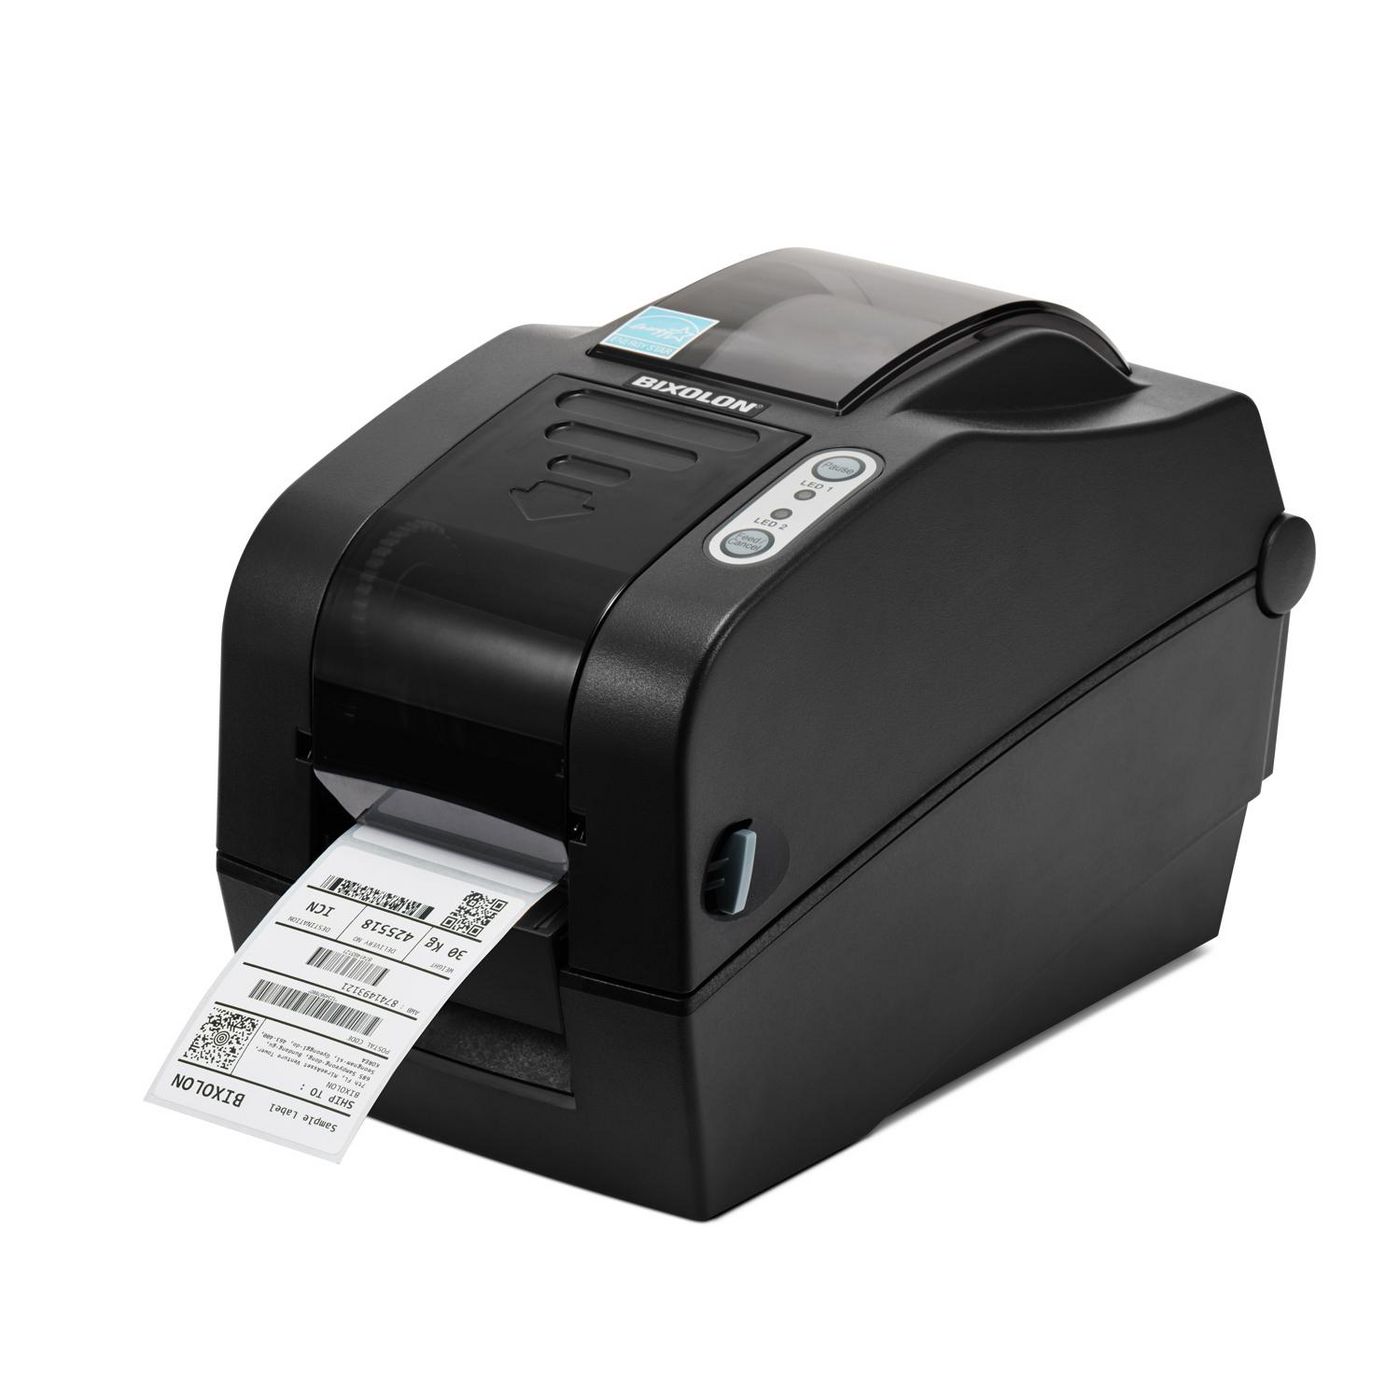 Slp-tx220dg -  Label Printer - Direct Thermal - USB / Parallel